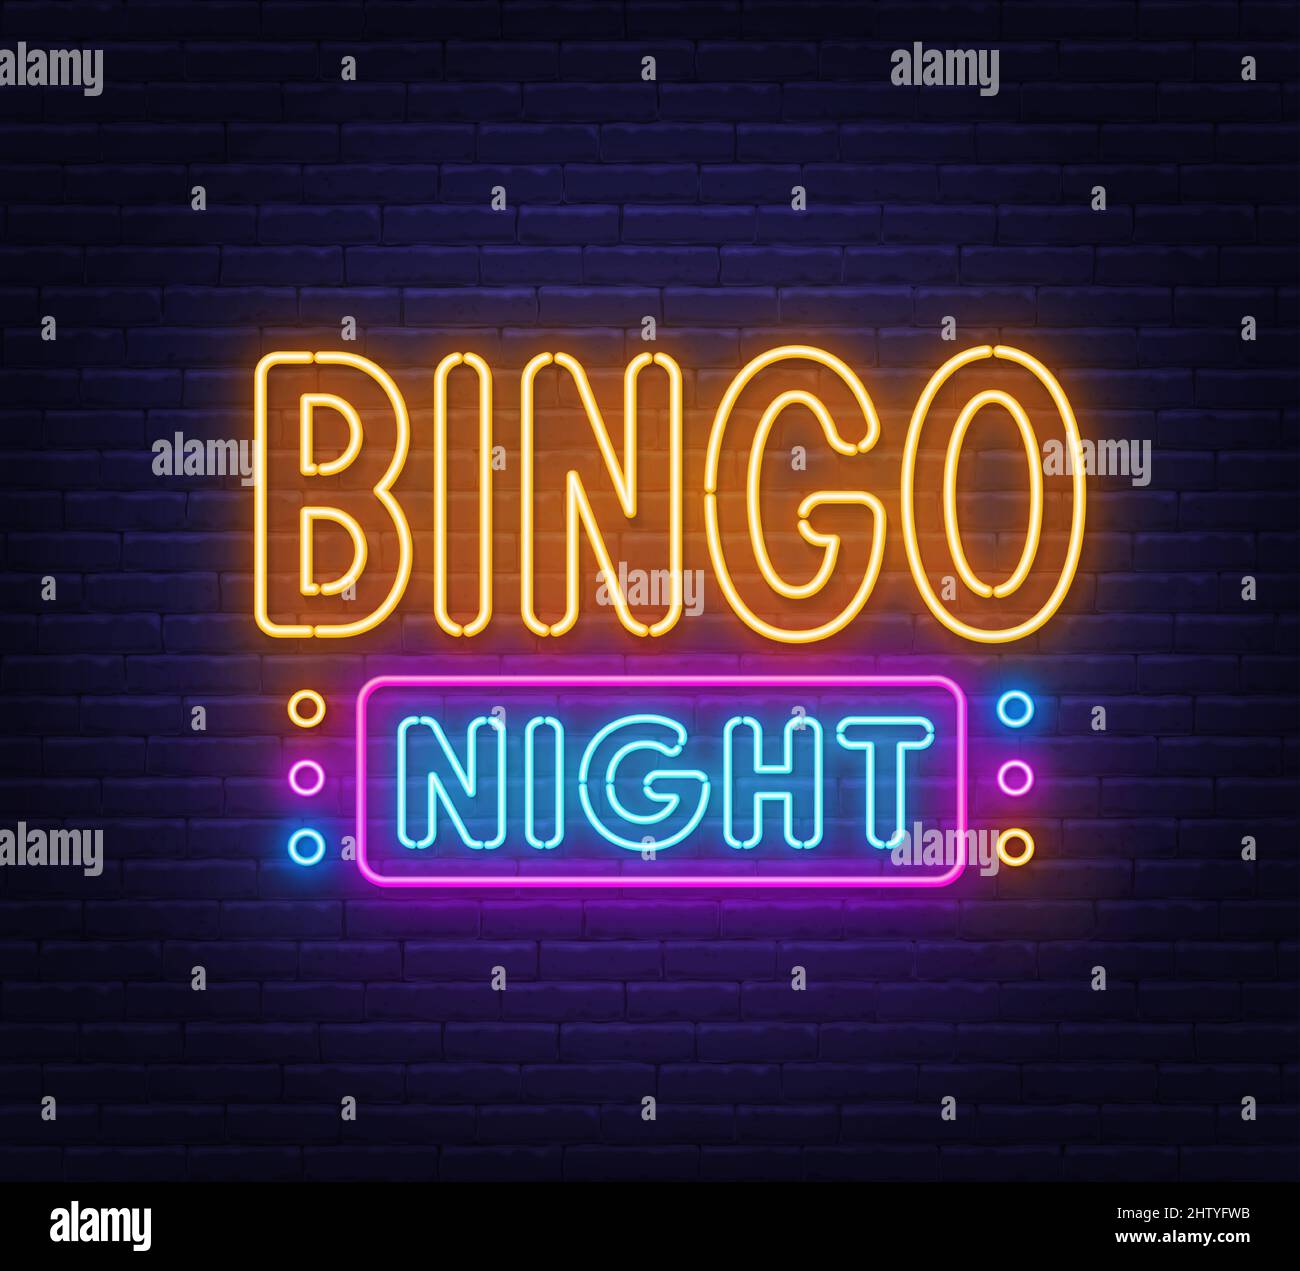 Bingo Night neon sign on brick wall background. Stock Vector